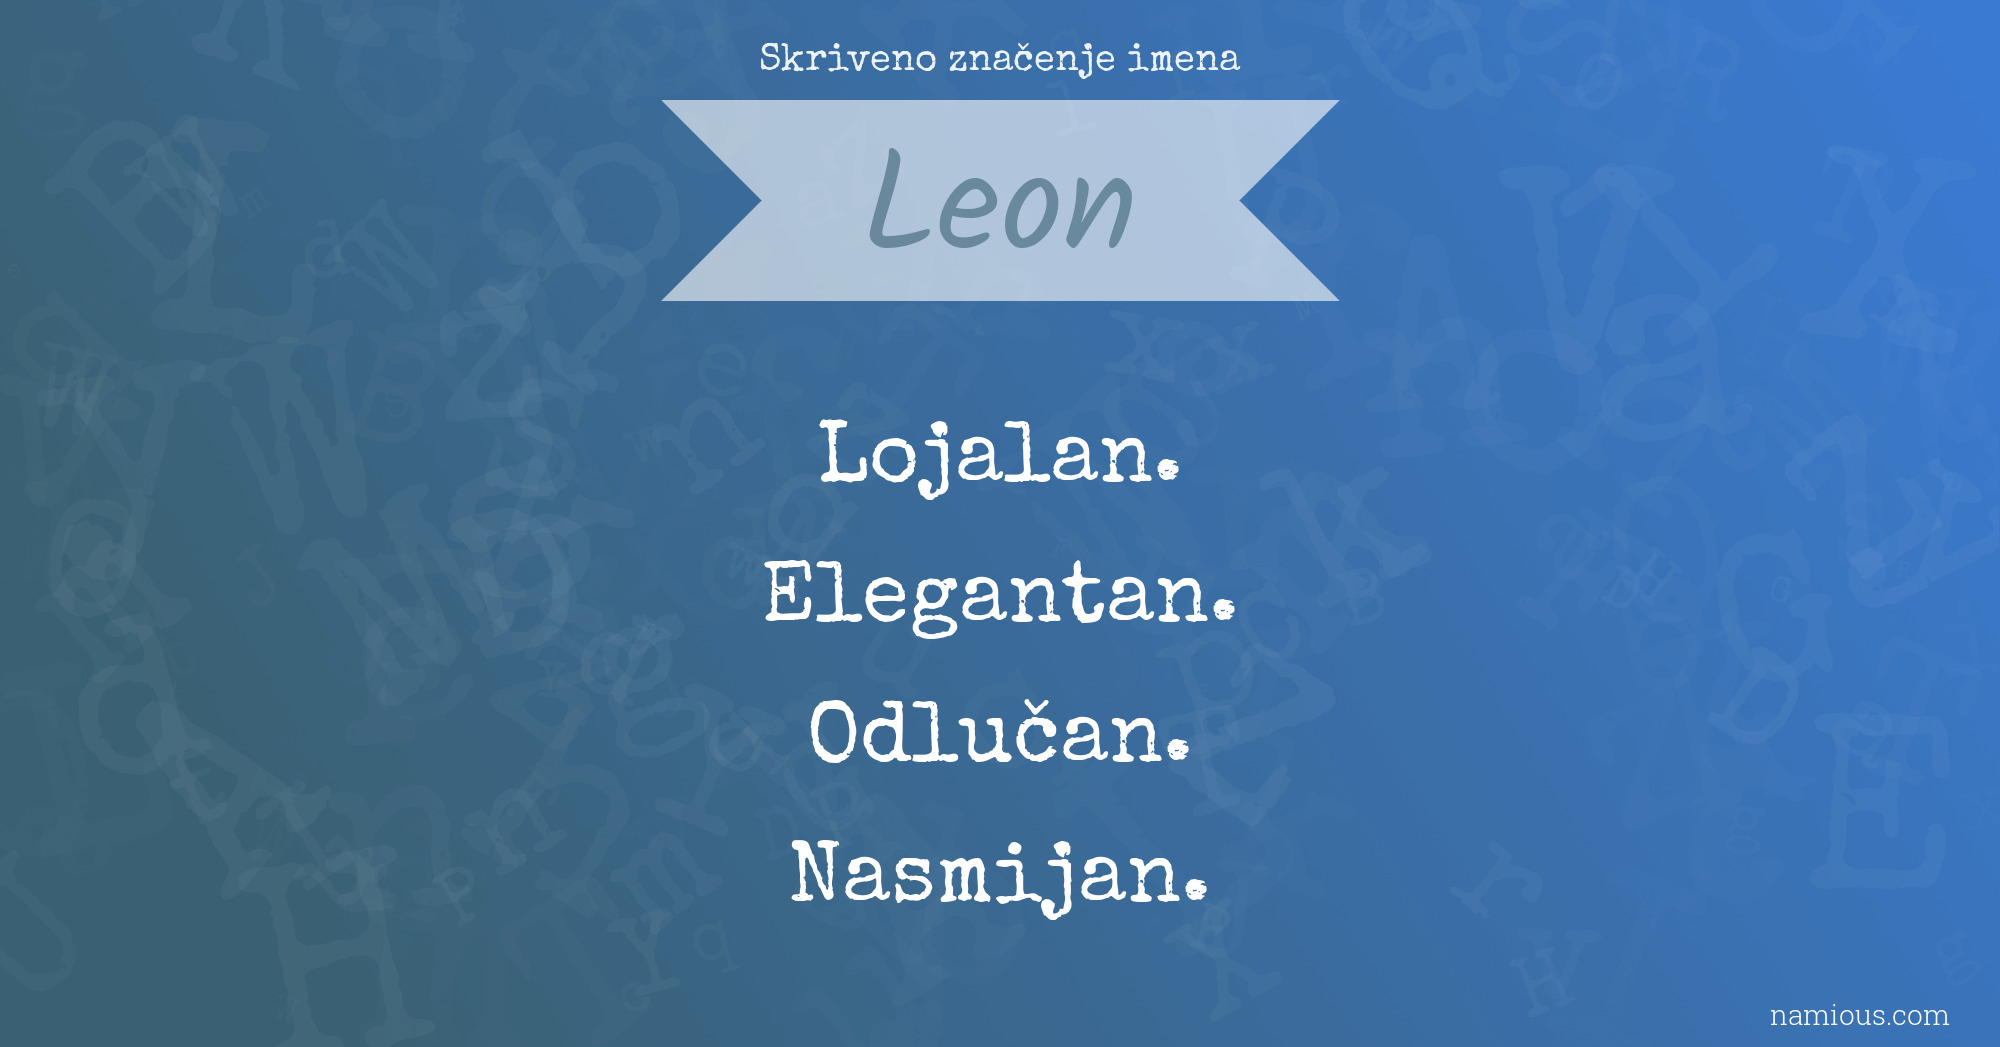 Skriveno značenje imena Leon